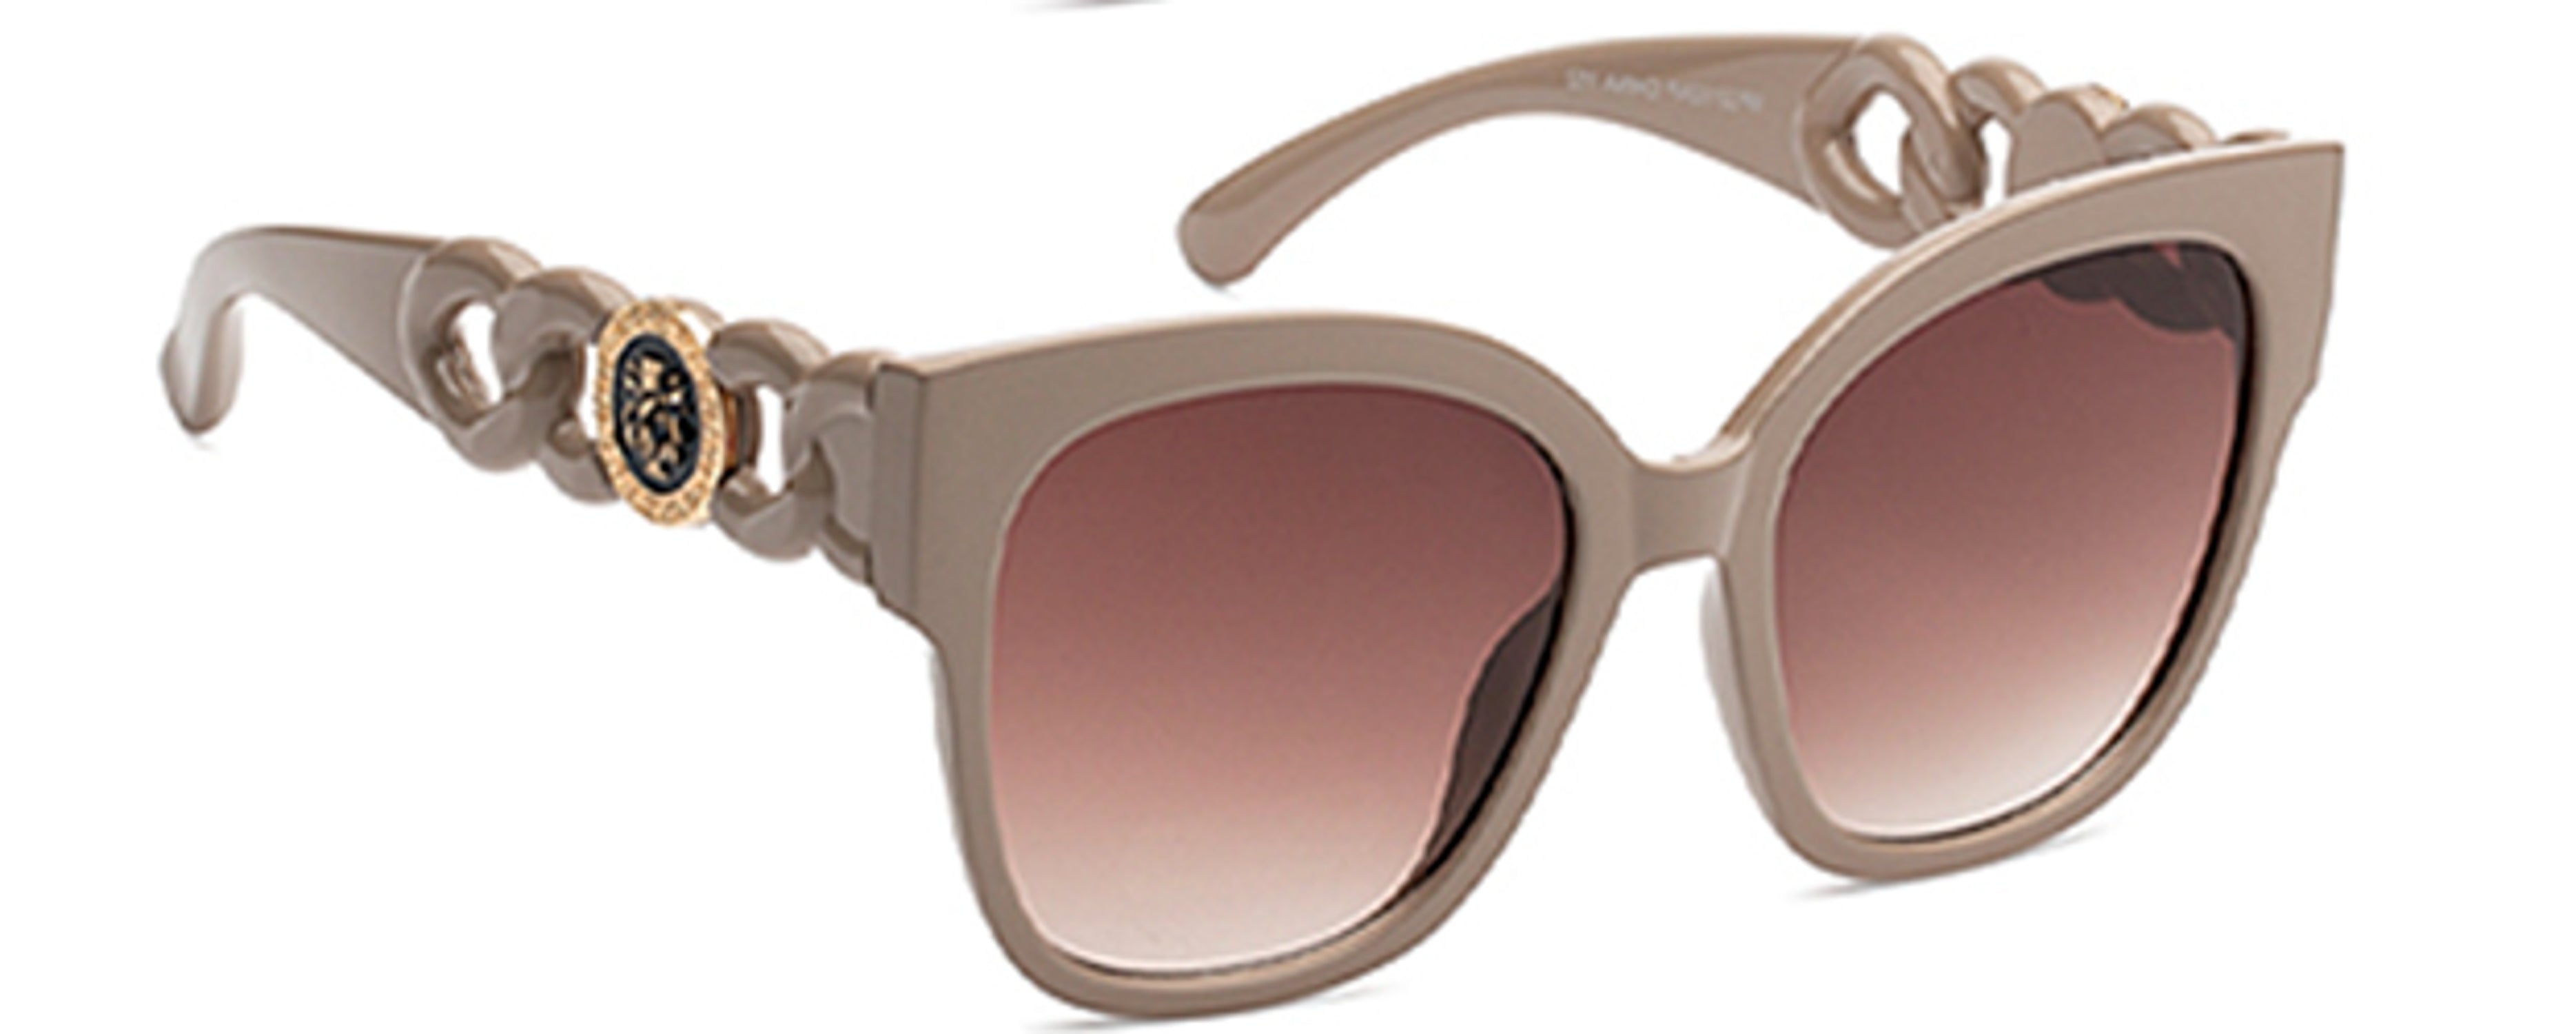 Ivory Fashion Design Round Cat Eye Sunglasses - Sunglasses at TFC&H Co.